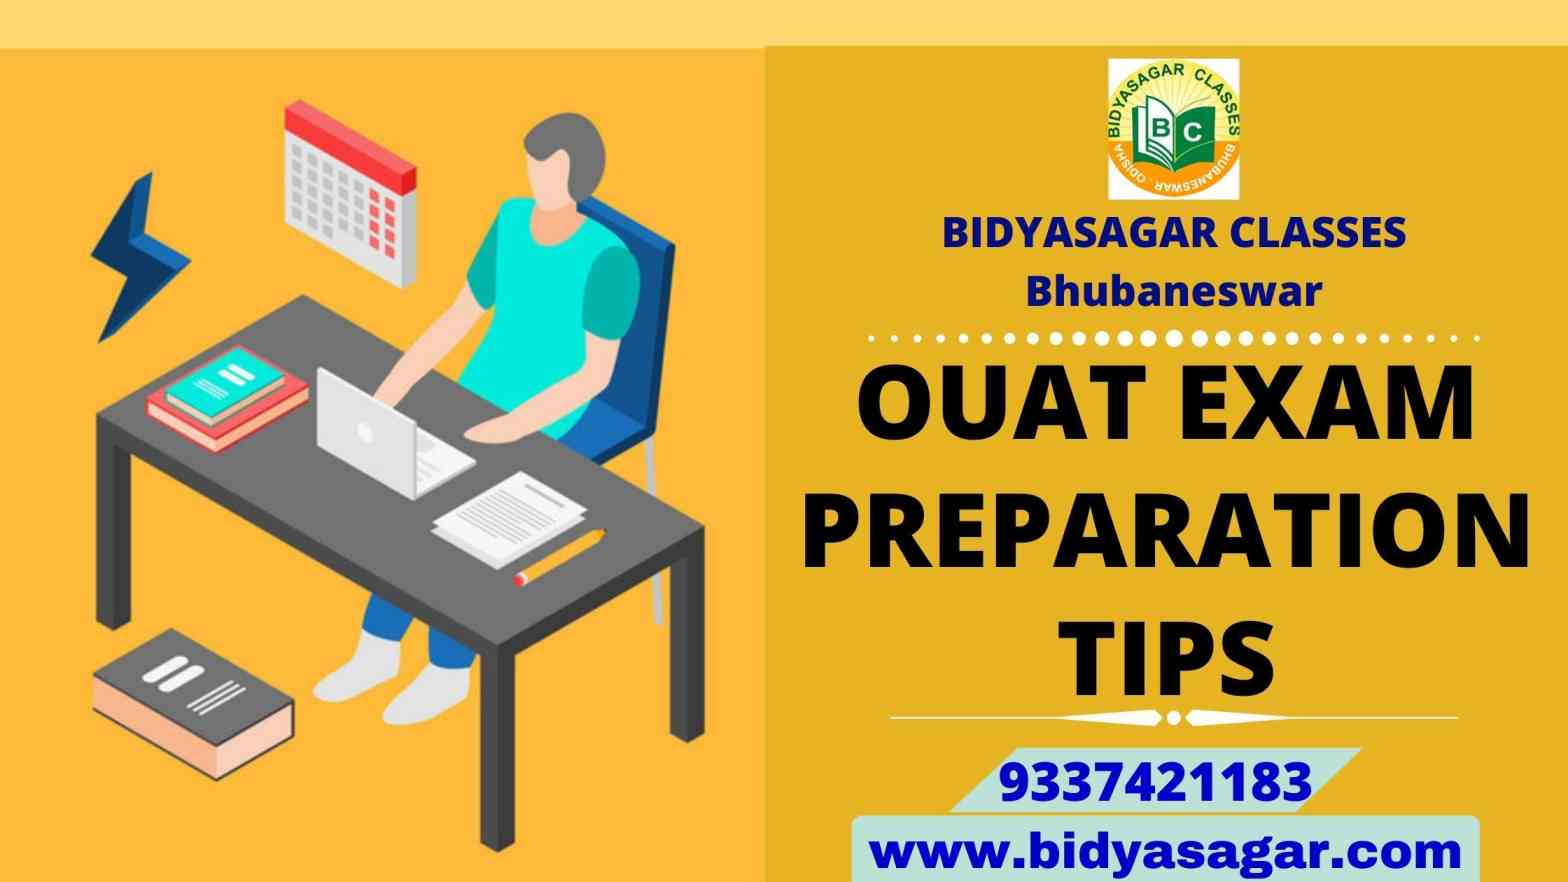 OUAT Exam 2021 Preparation Tips